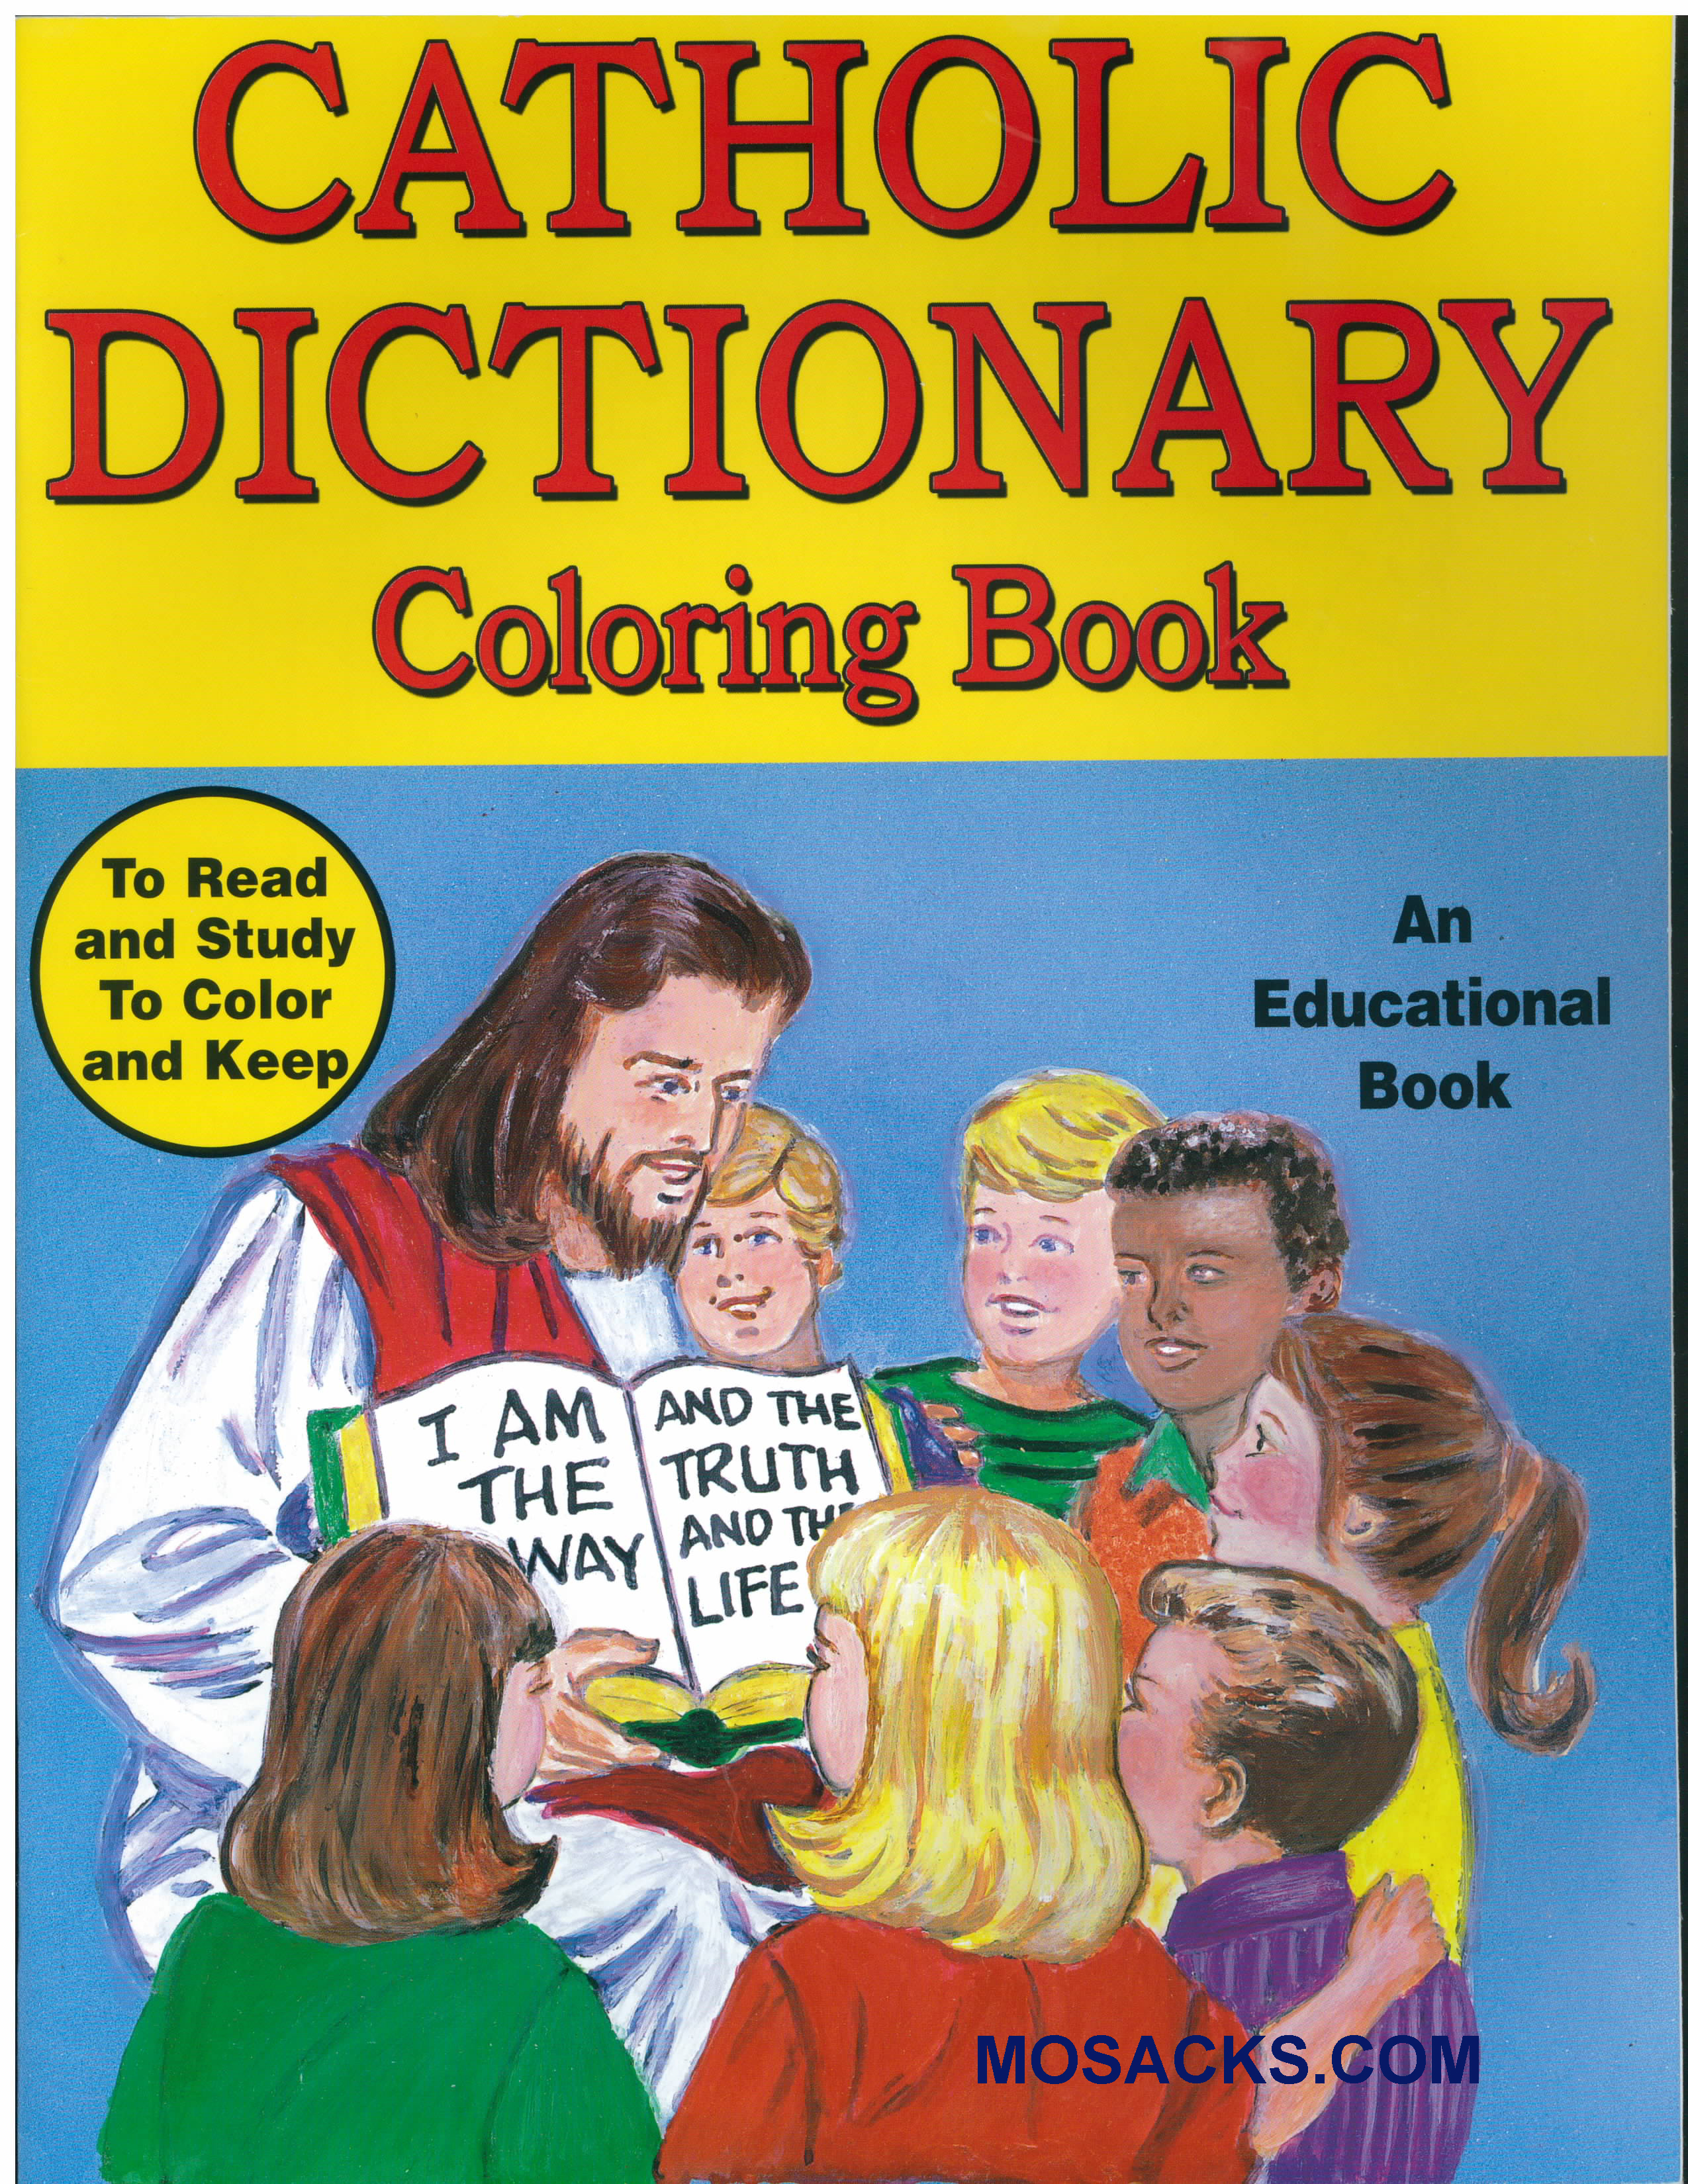 St Joseph Educational Coloring Book Catholic Dictionary-978089942679-2